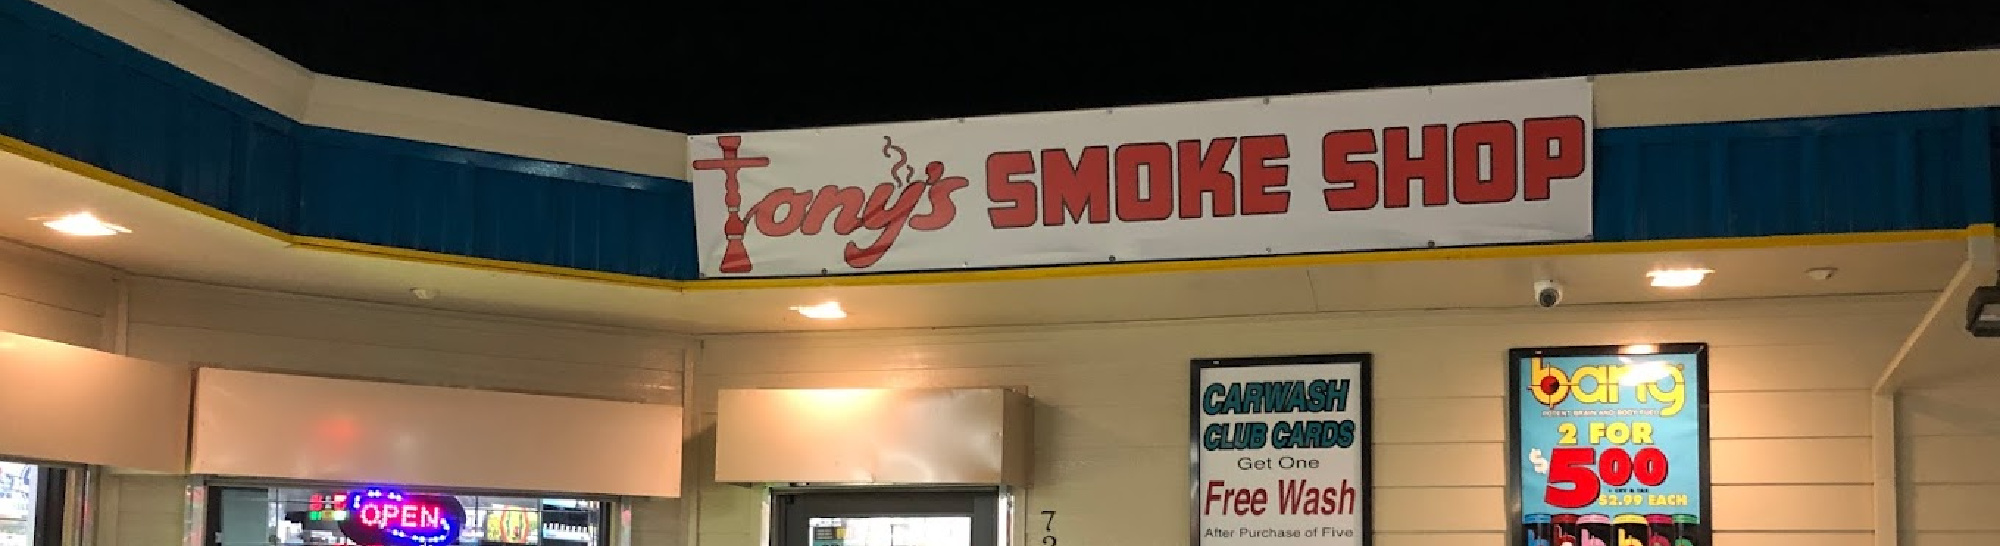 image of tonys smoke shop in redding ca